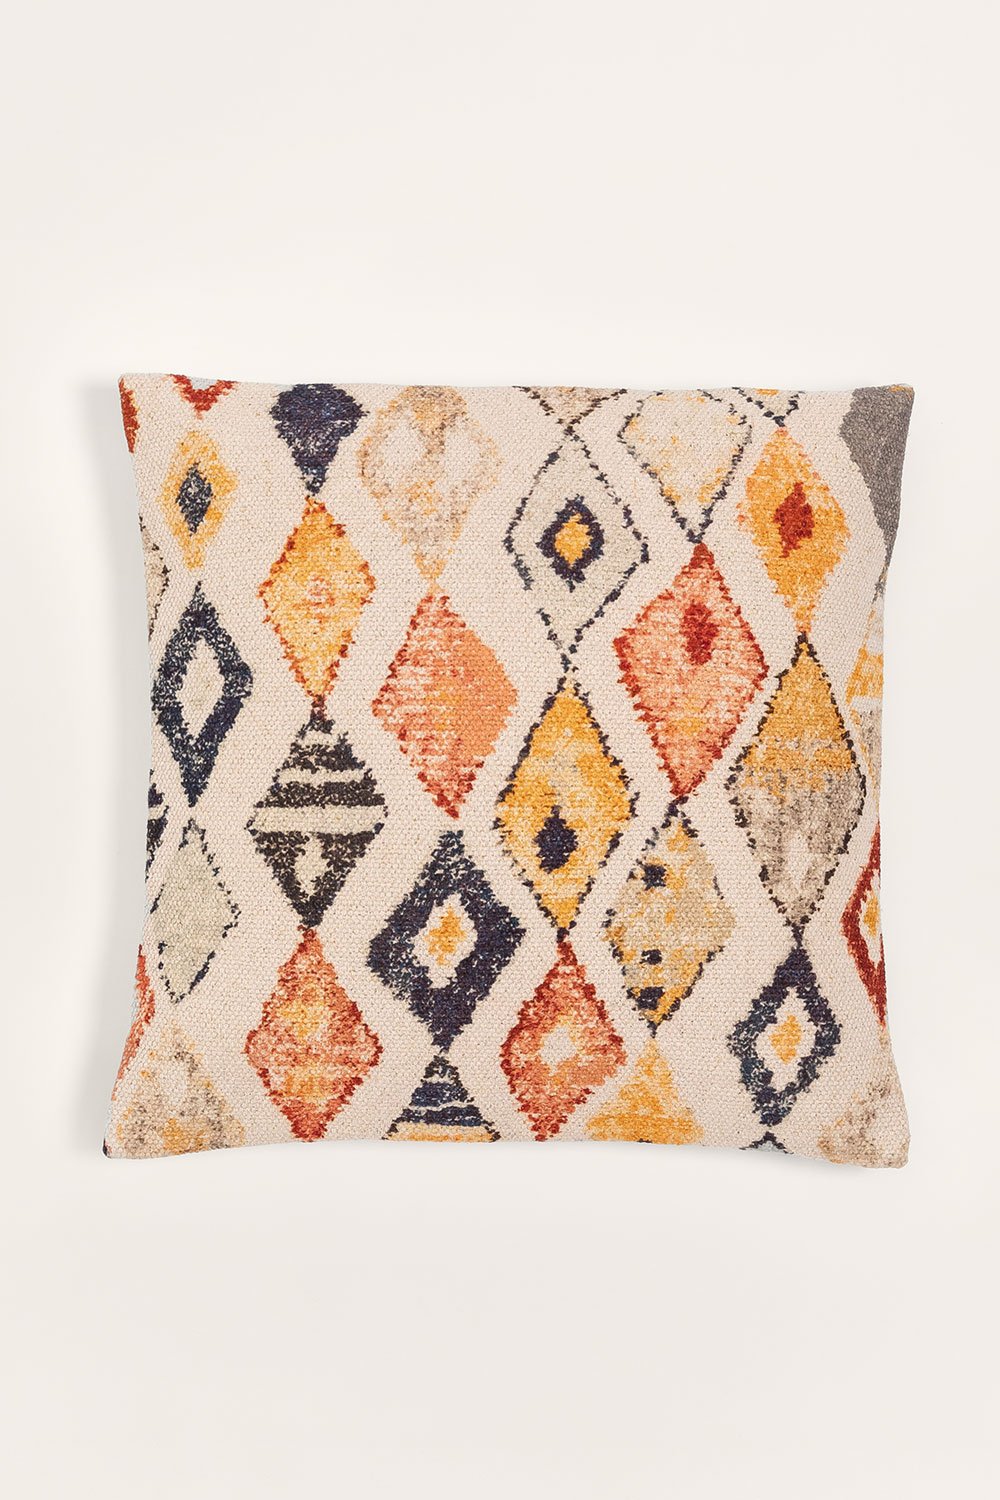 Square Cotton Cushion (45 x 45 cm) Yuga, gallery image 1